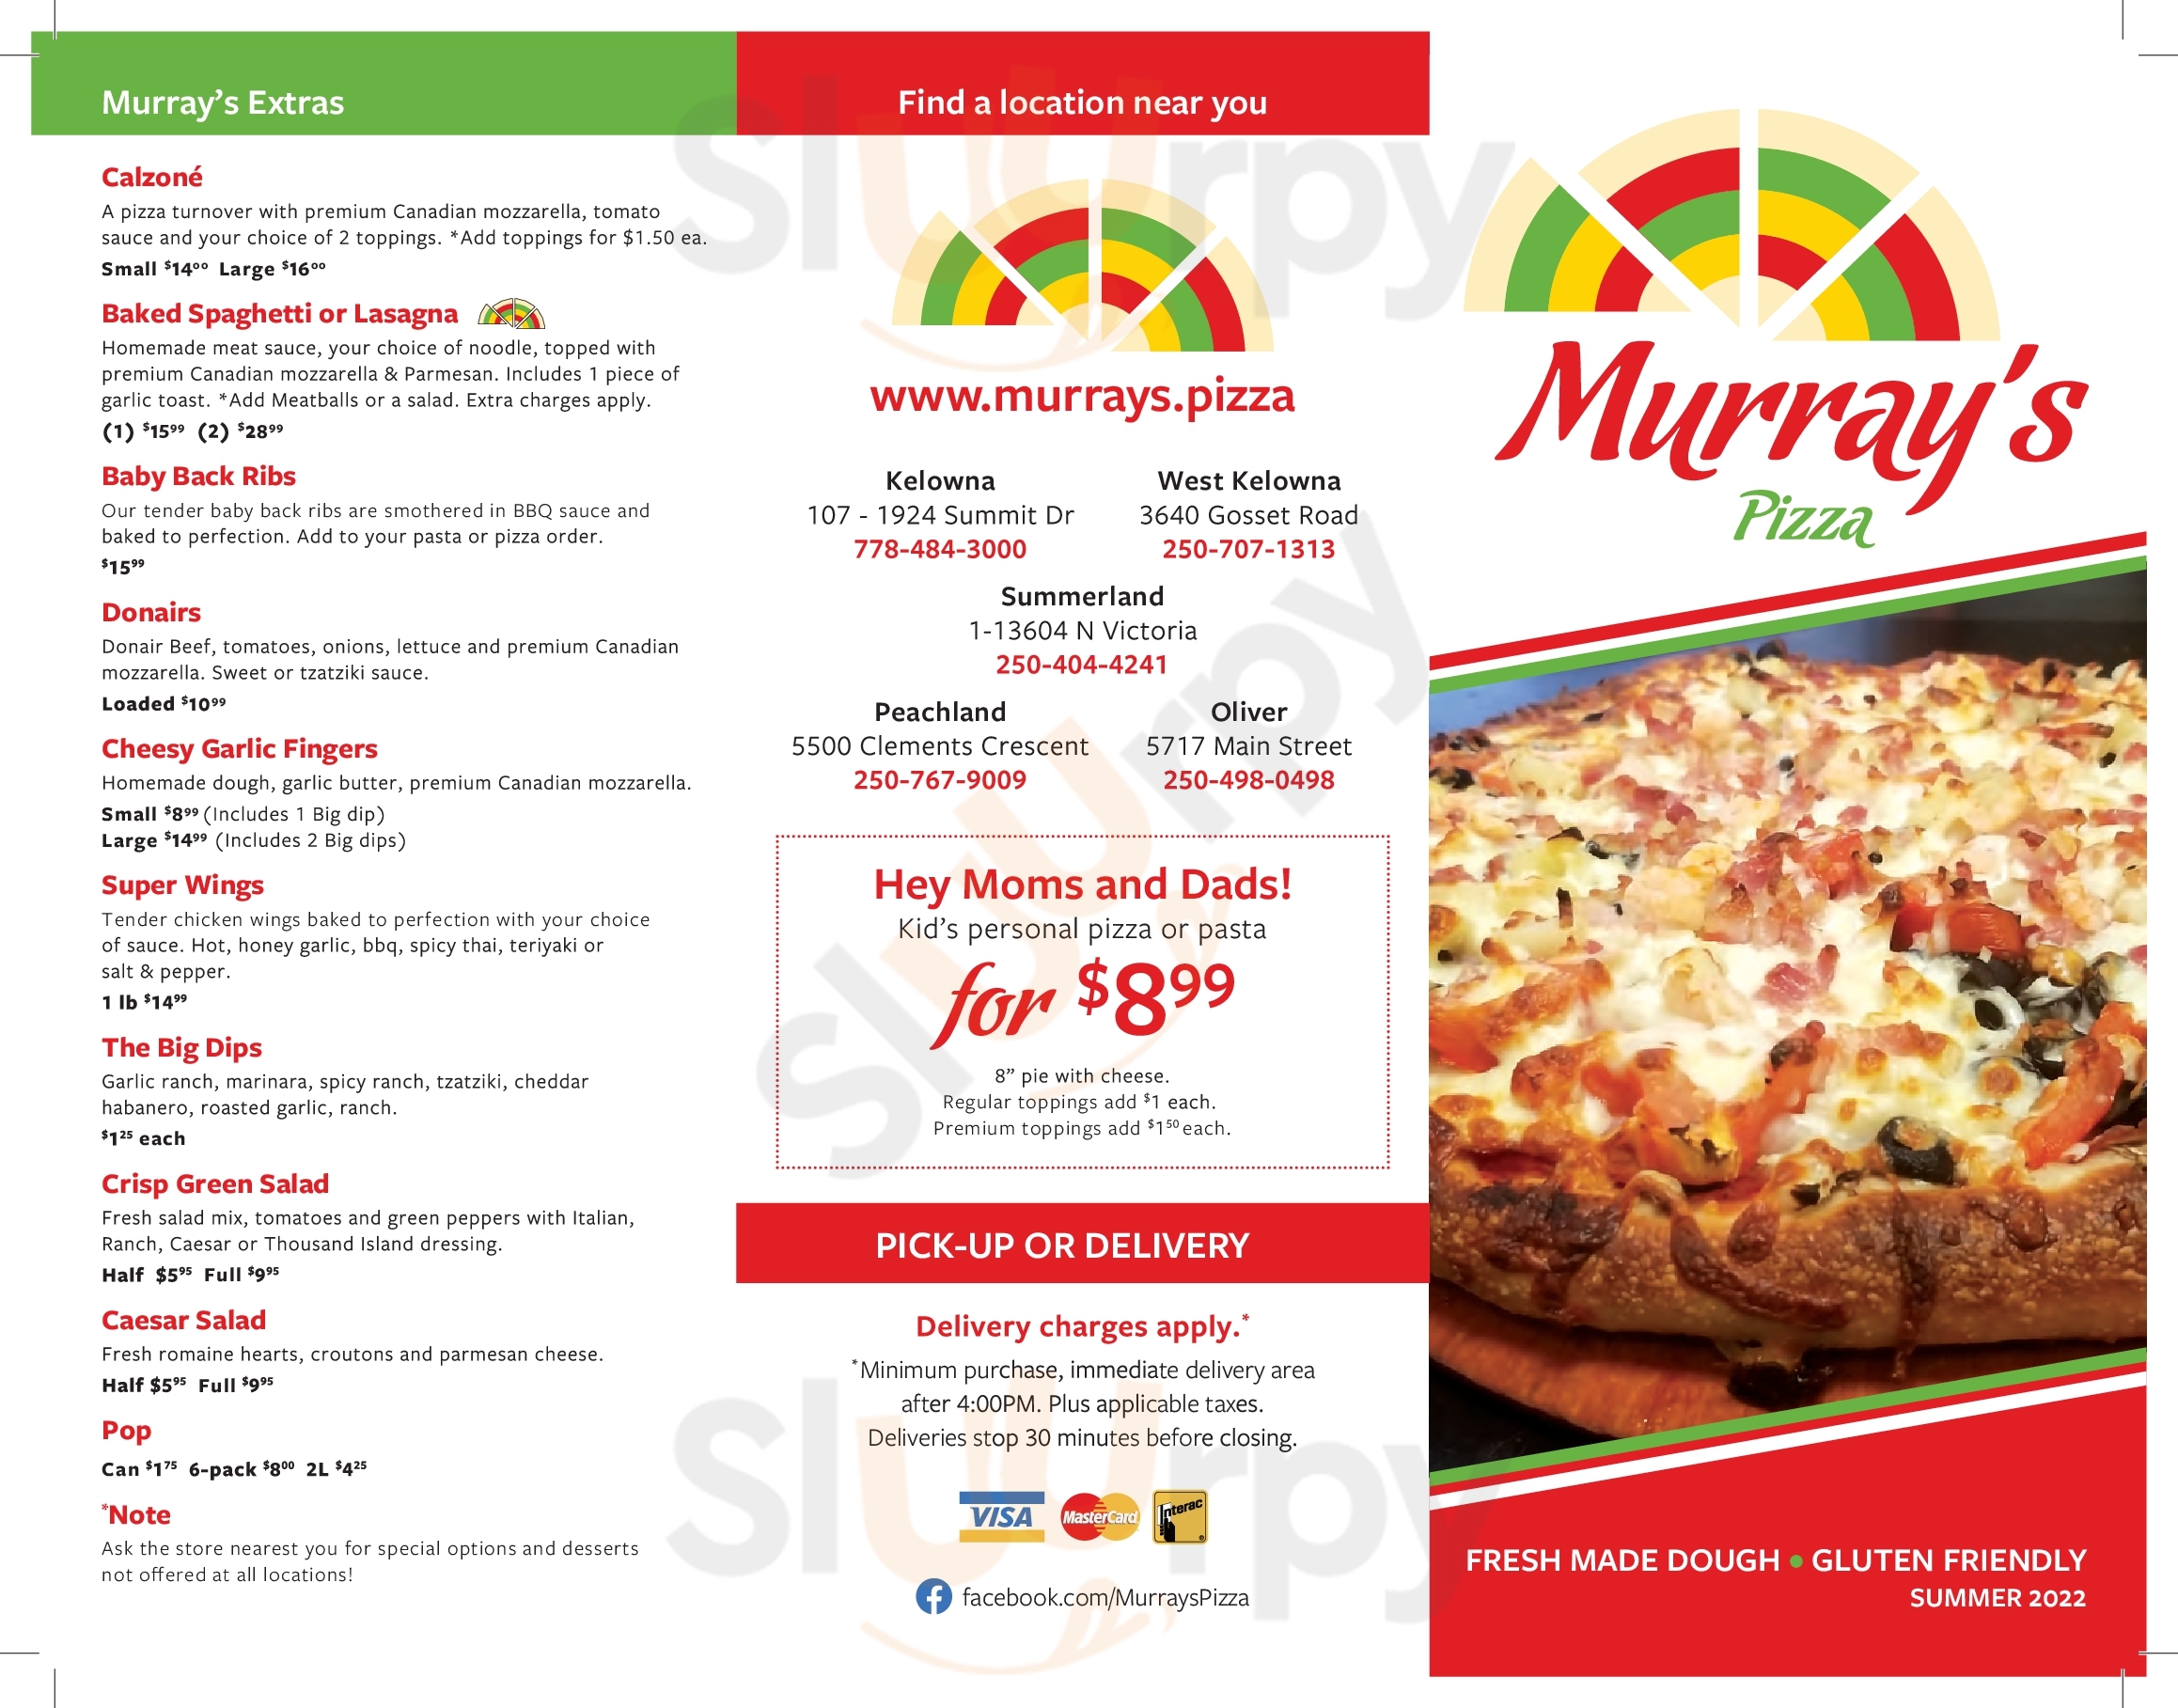 Murray's Pizza Oliver Menu - 1